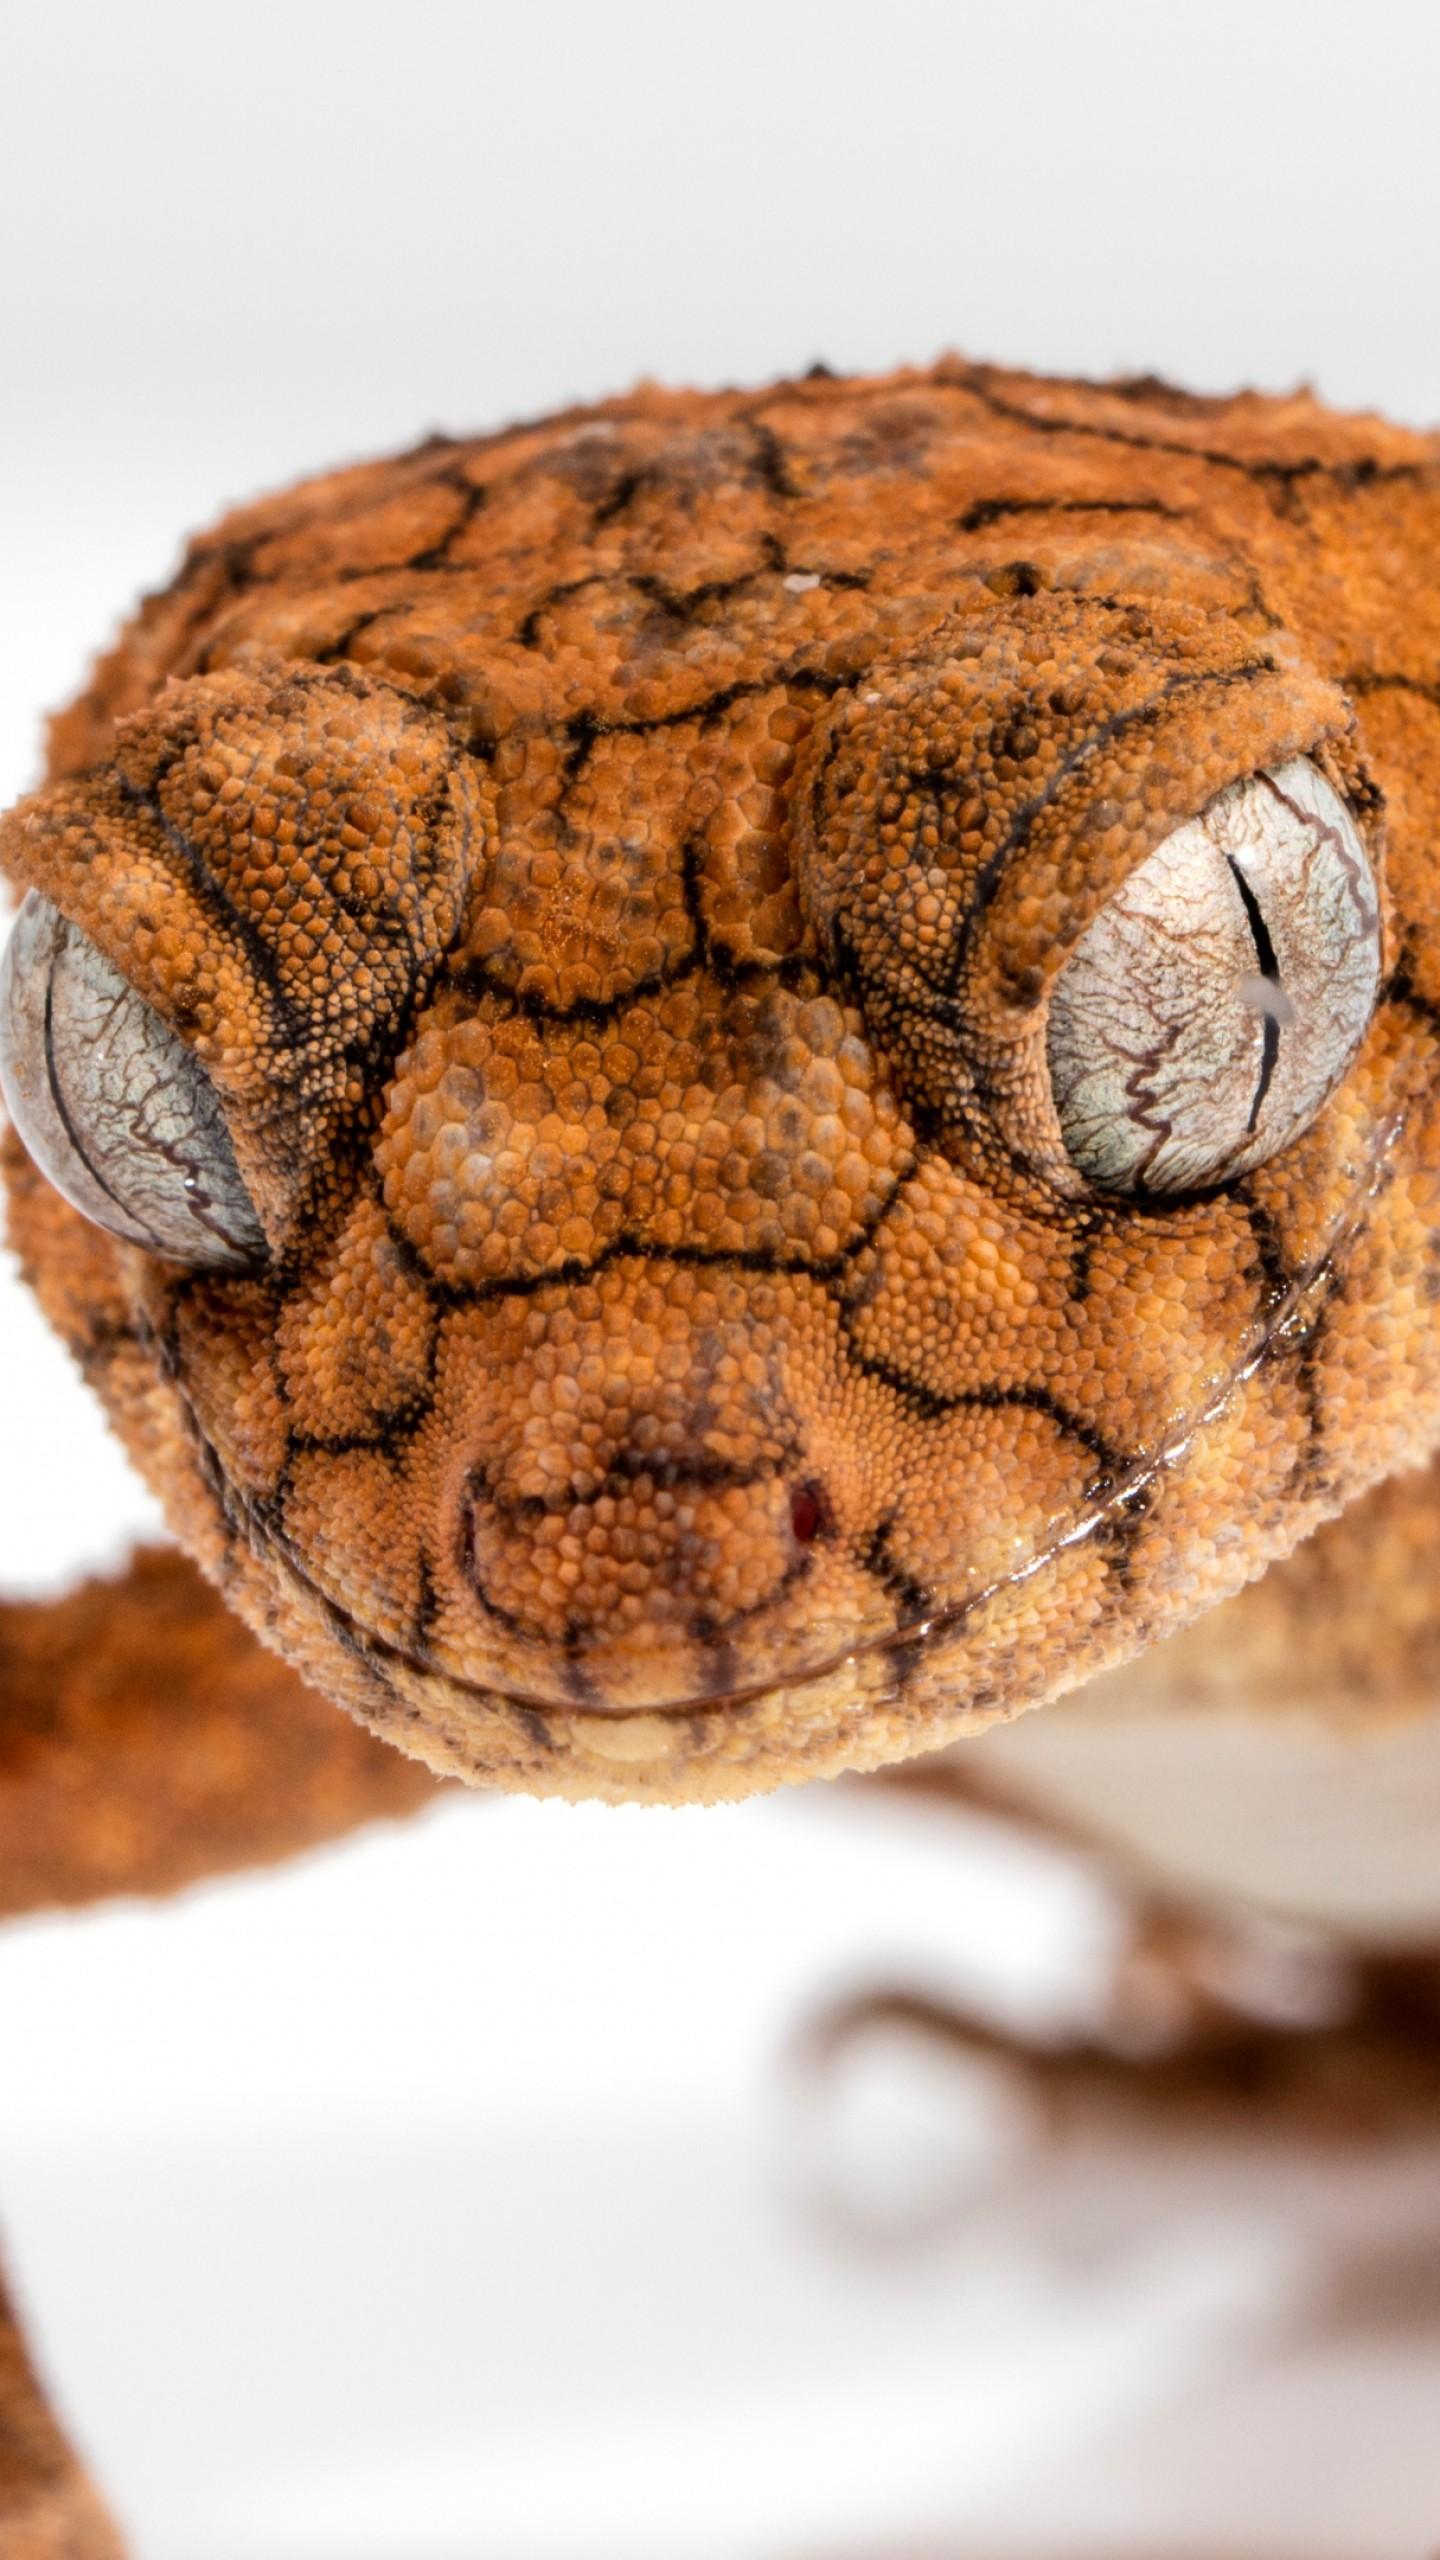 Wallpaper Gecko, Caledonian Crested Gecko, Reptile, Lizard, Close Up